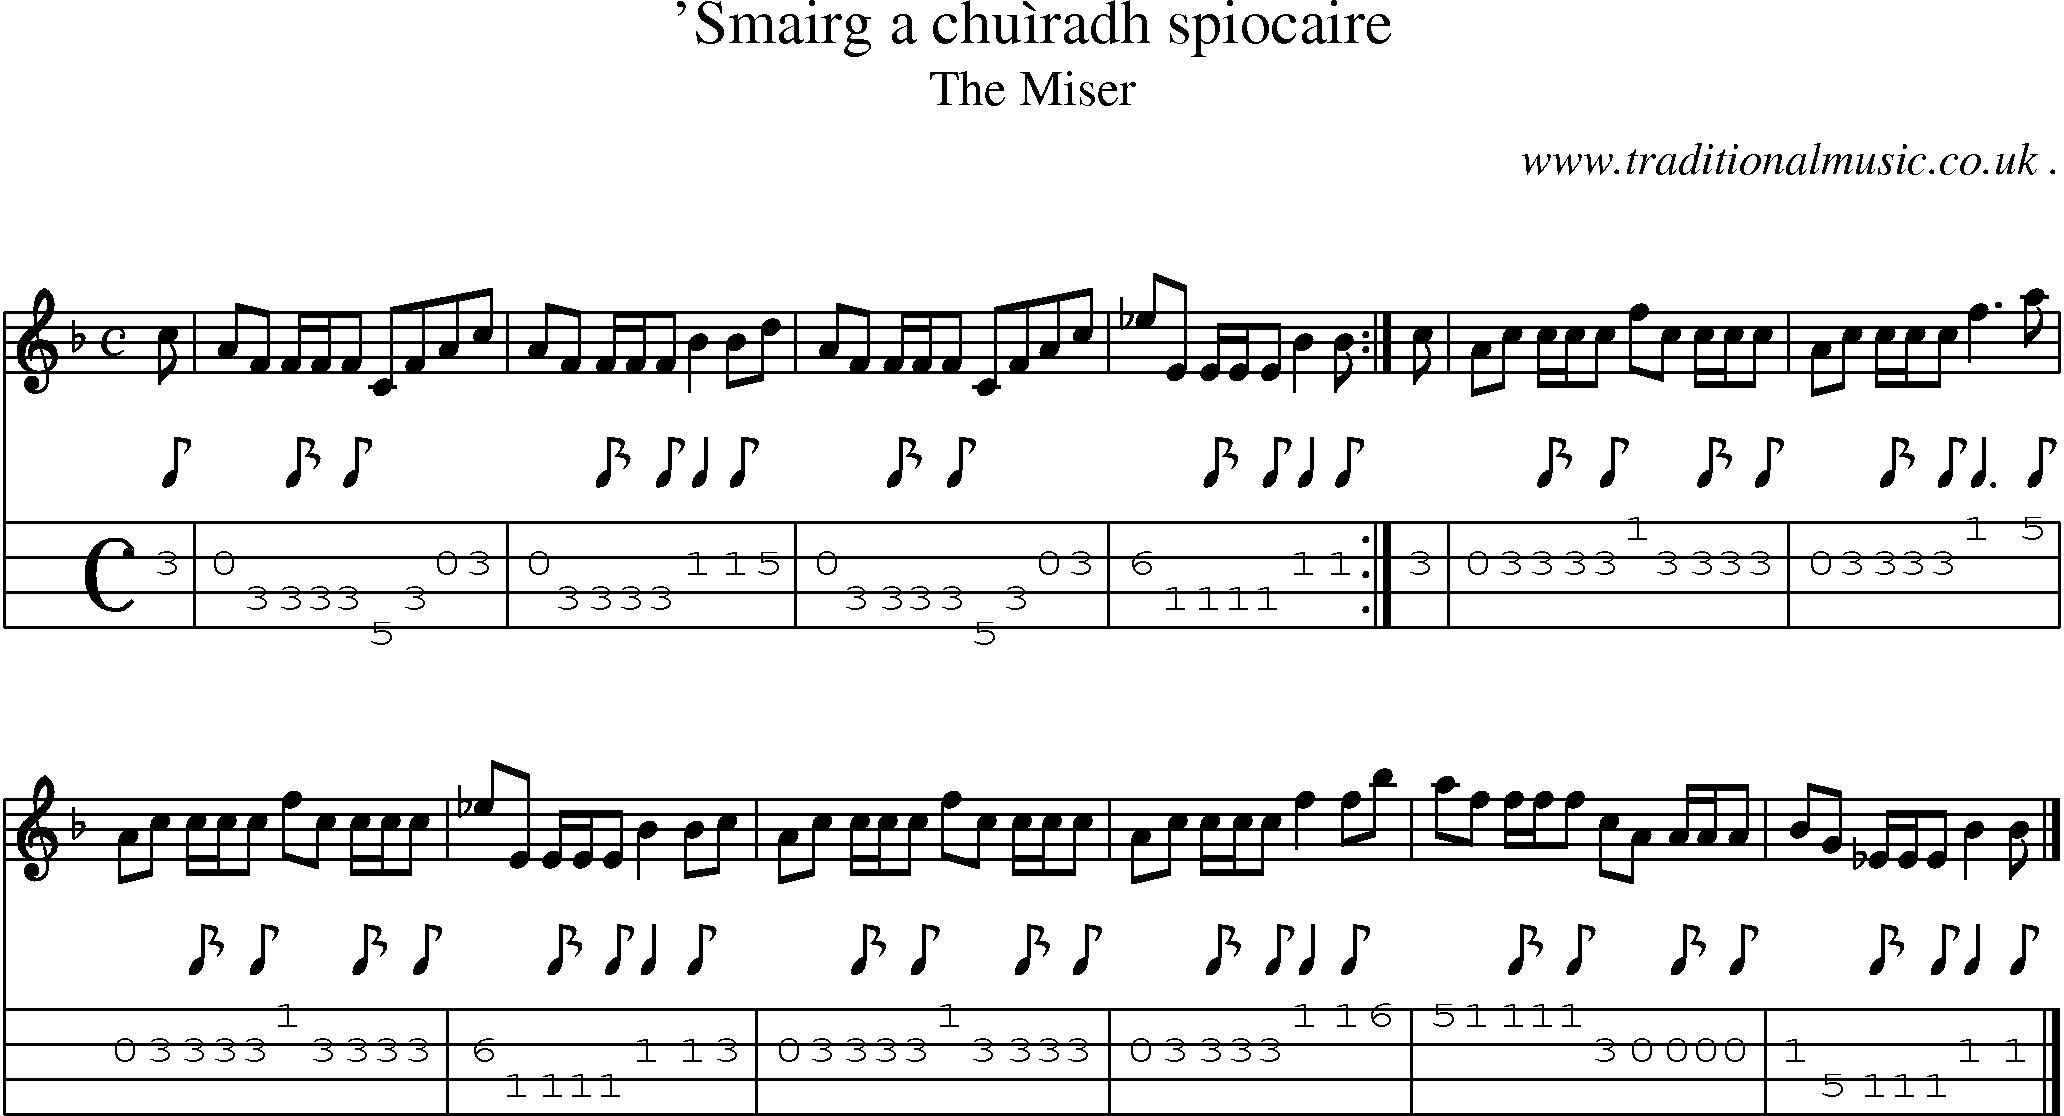 Sheet-music  score, Chords and Mandolin Tabs for Smairg A Chuiradh Spiocaire